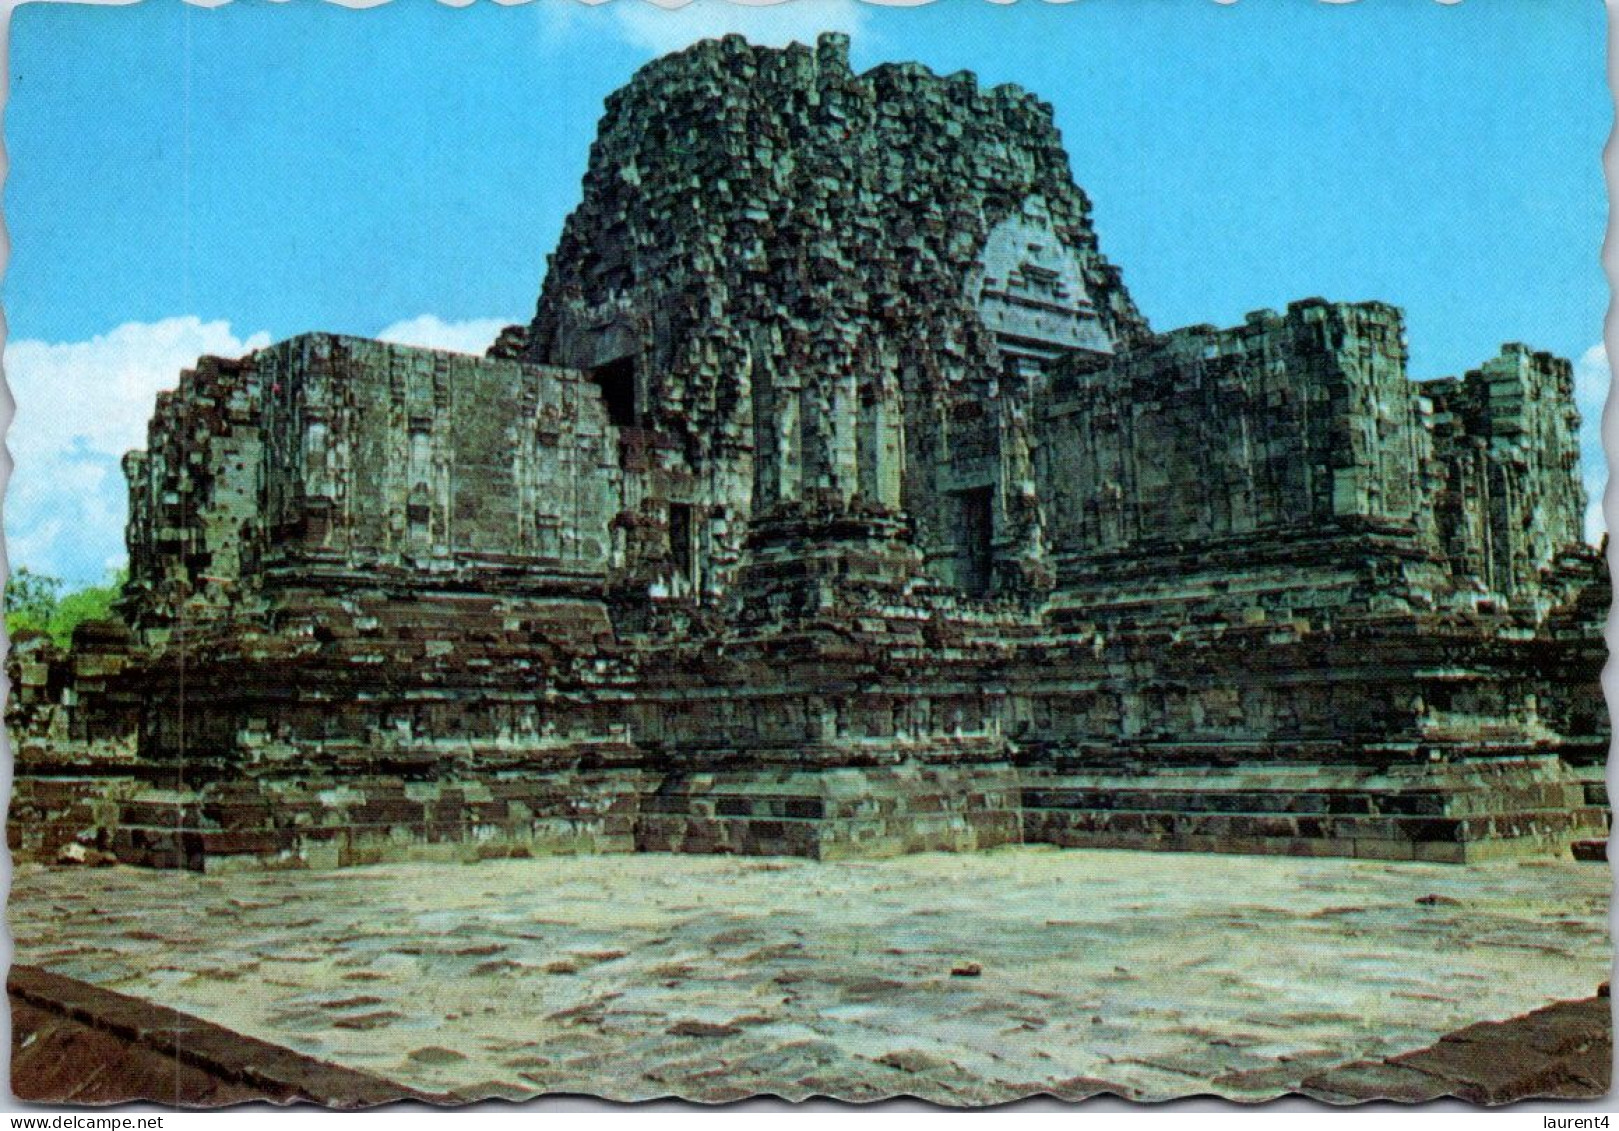 23-2-2024 (1 Y 1) Indonesia - Java Temple - Boeddhisme